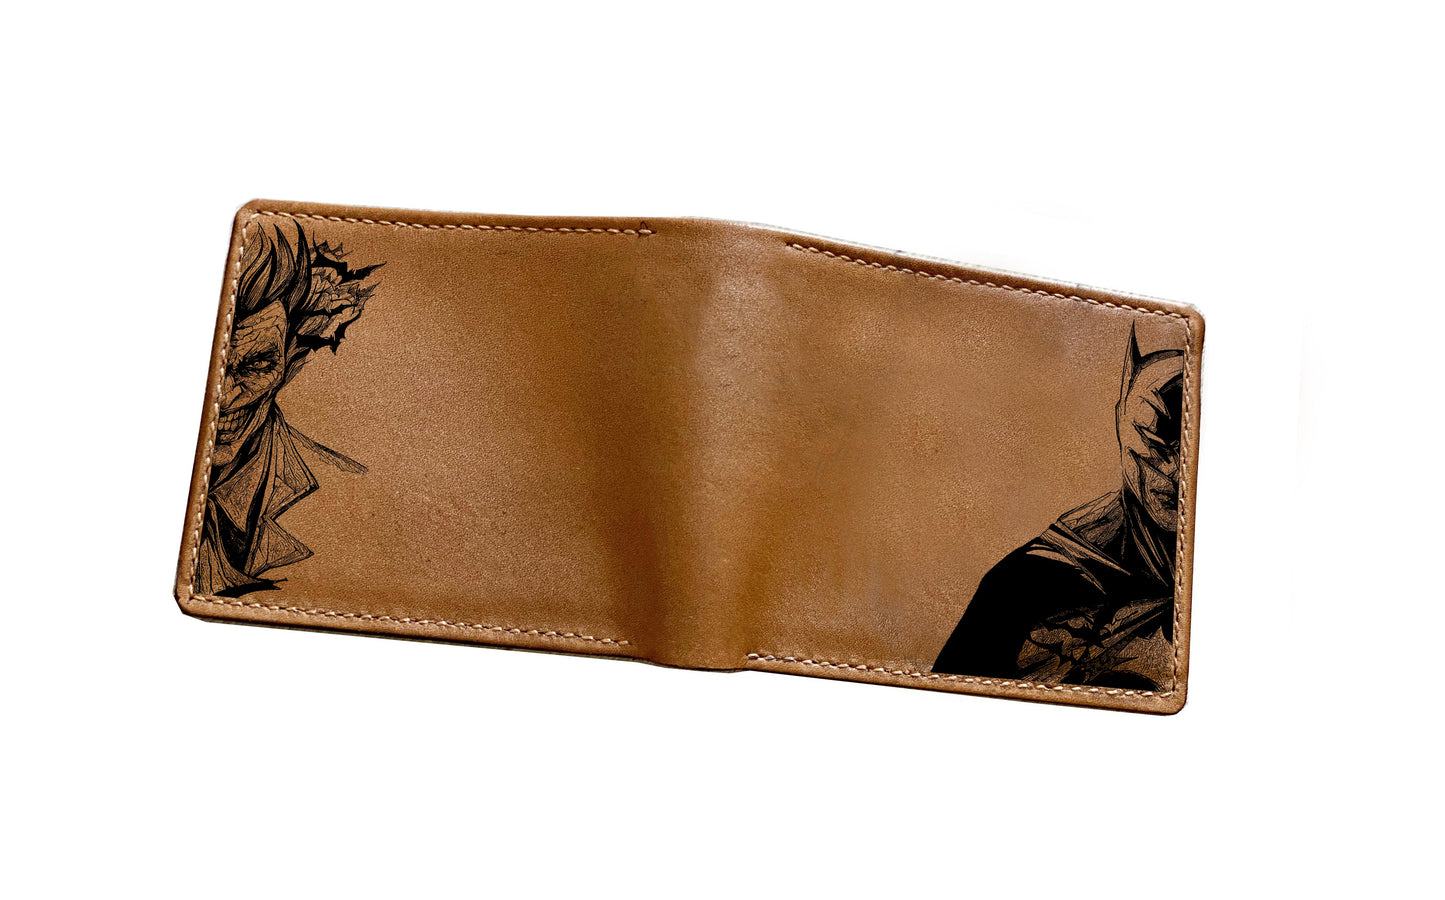 Mayan Corner - Genuine leather batman wallet, bifold leather wallet, superheroes gift for dad, boyfriend, batman small leather gift for friend